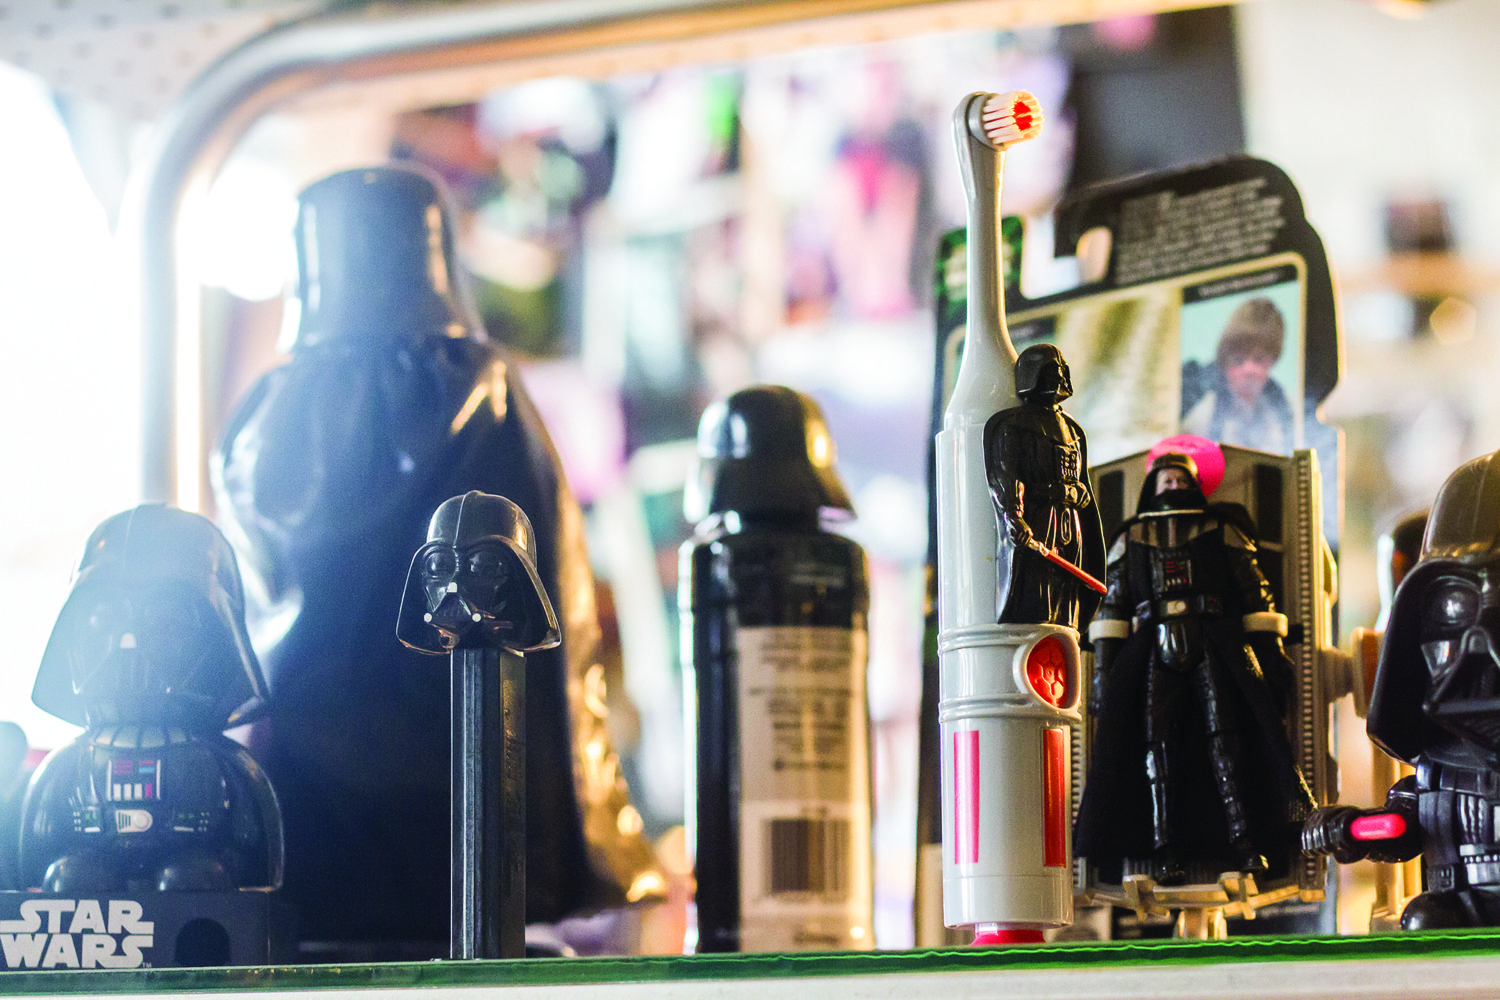 Star Wars Figures and Memorabilia